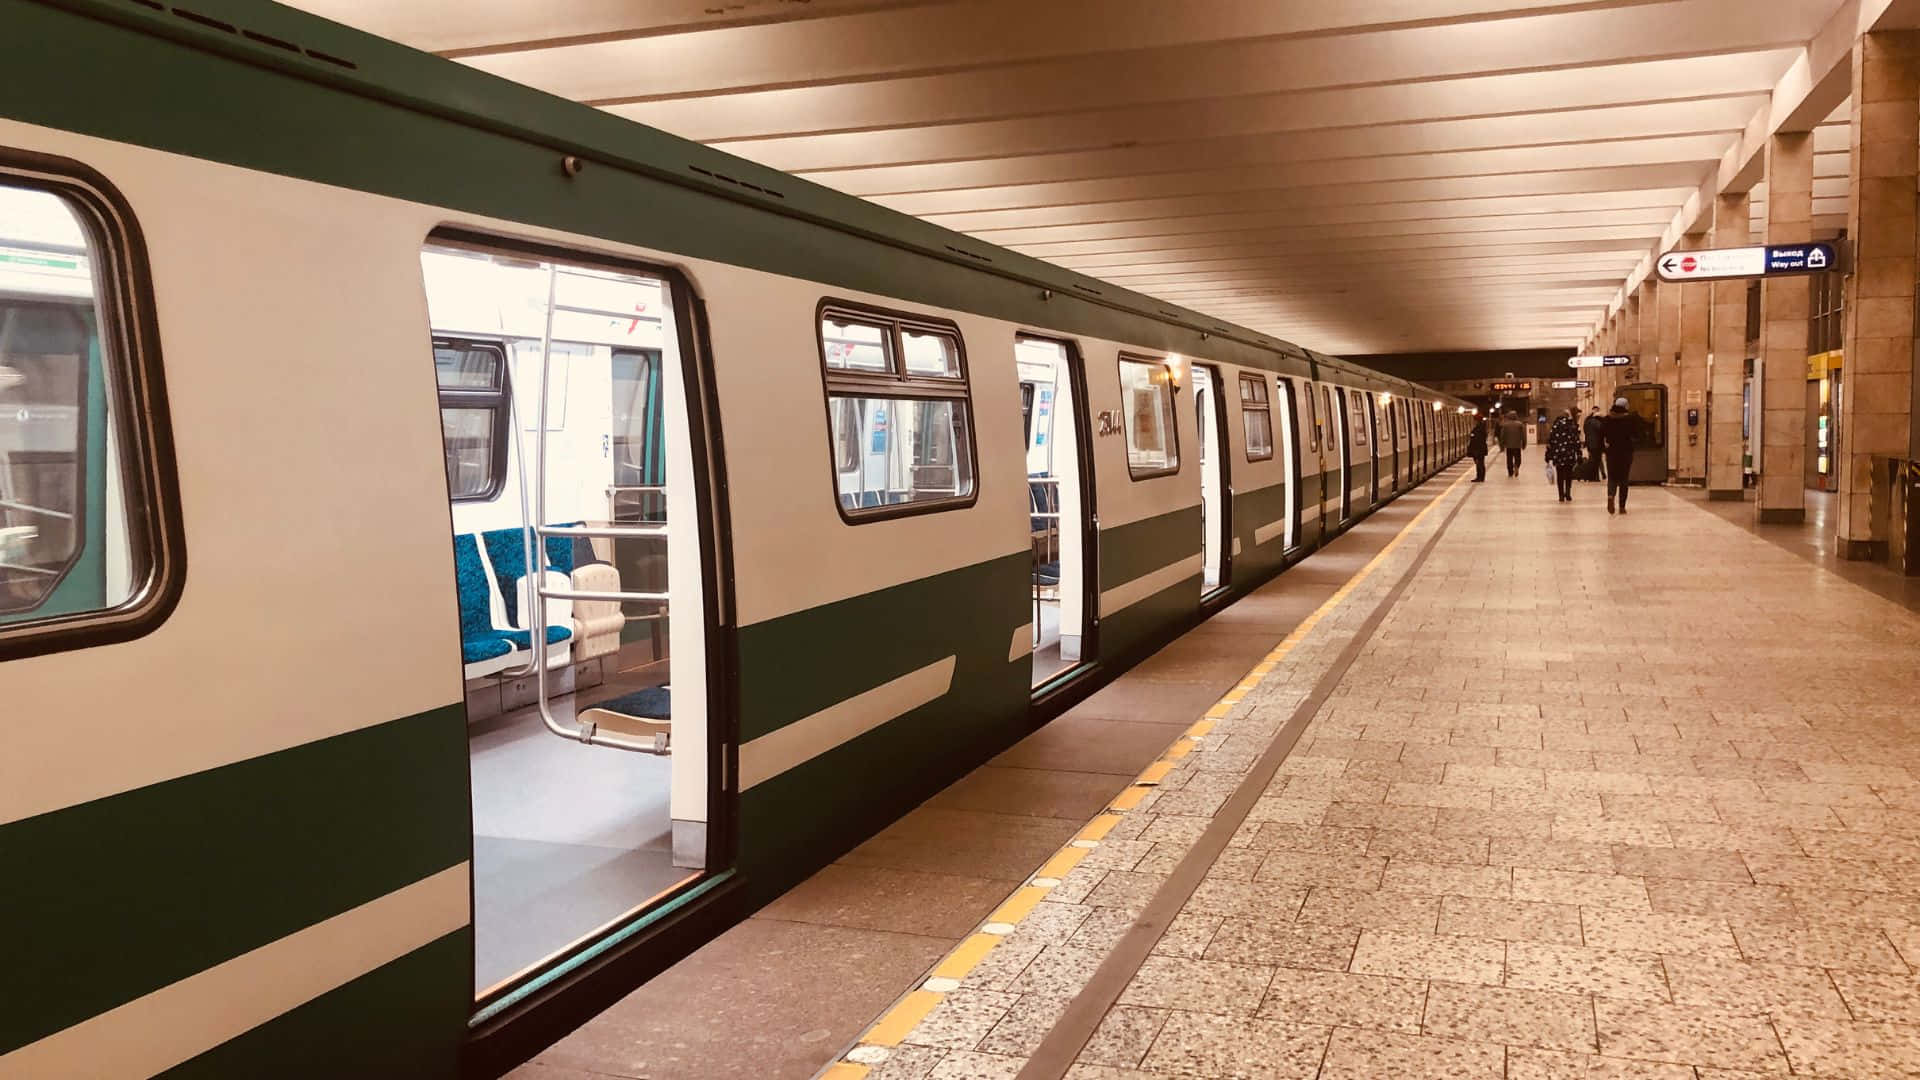 Subway train in motion at underground station